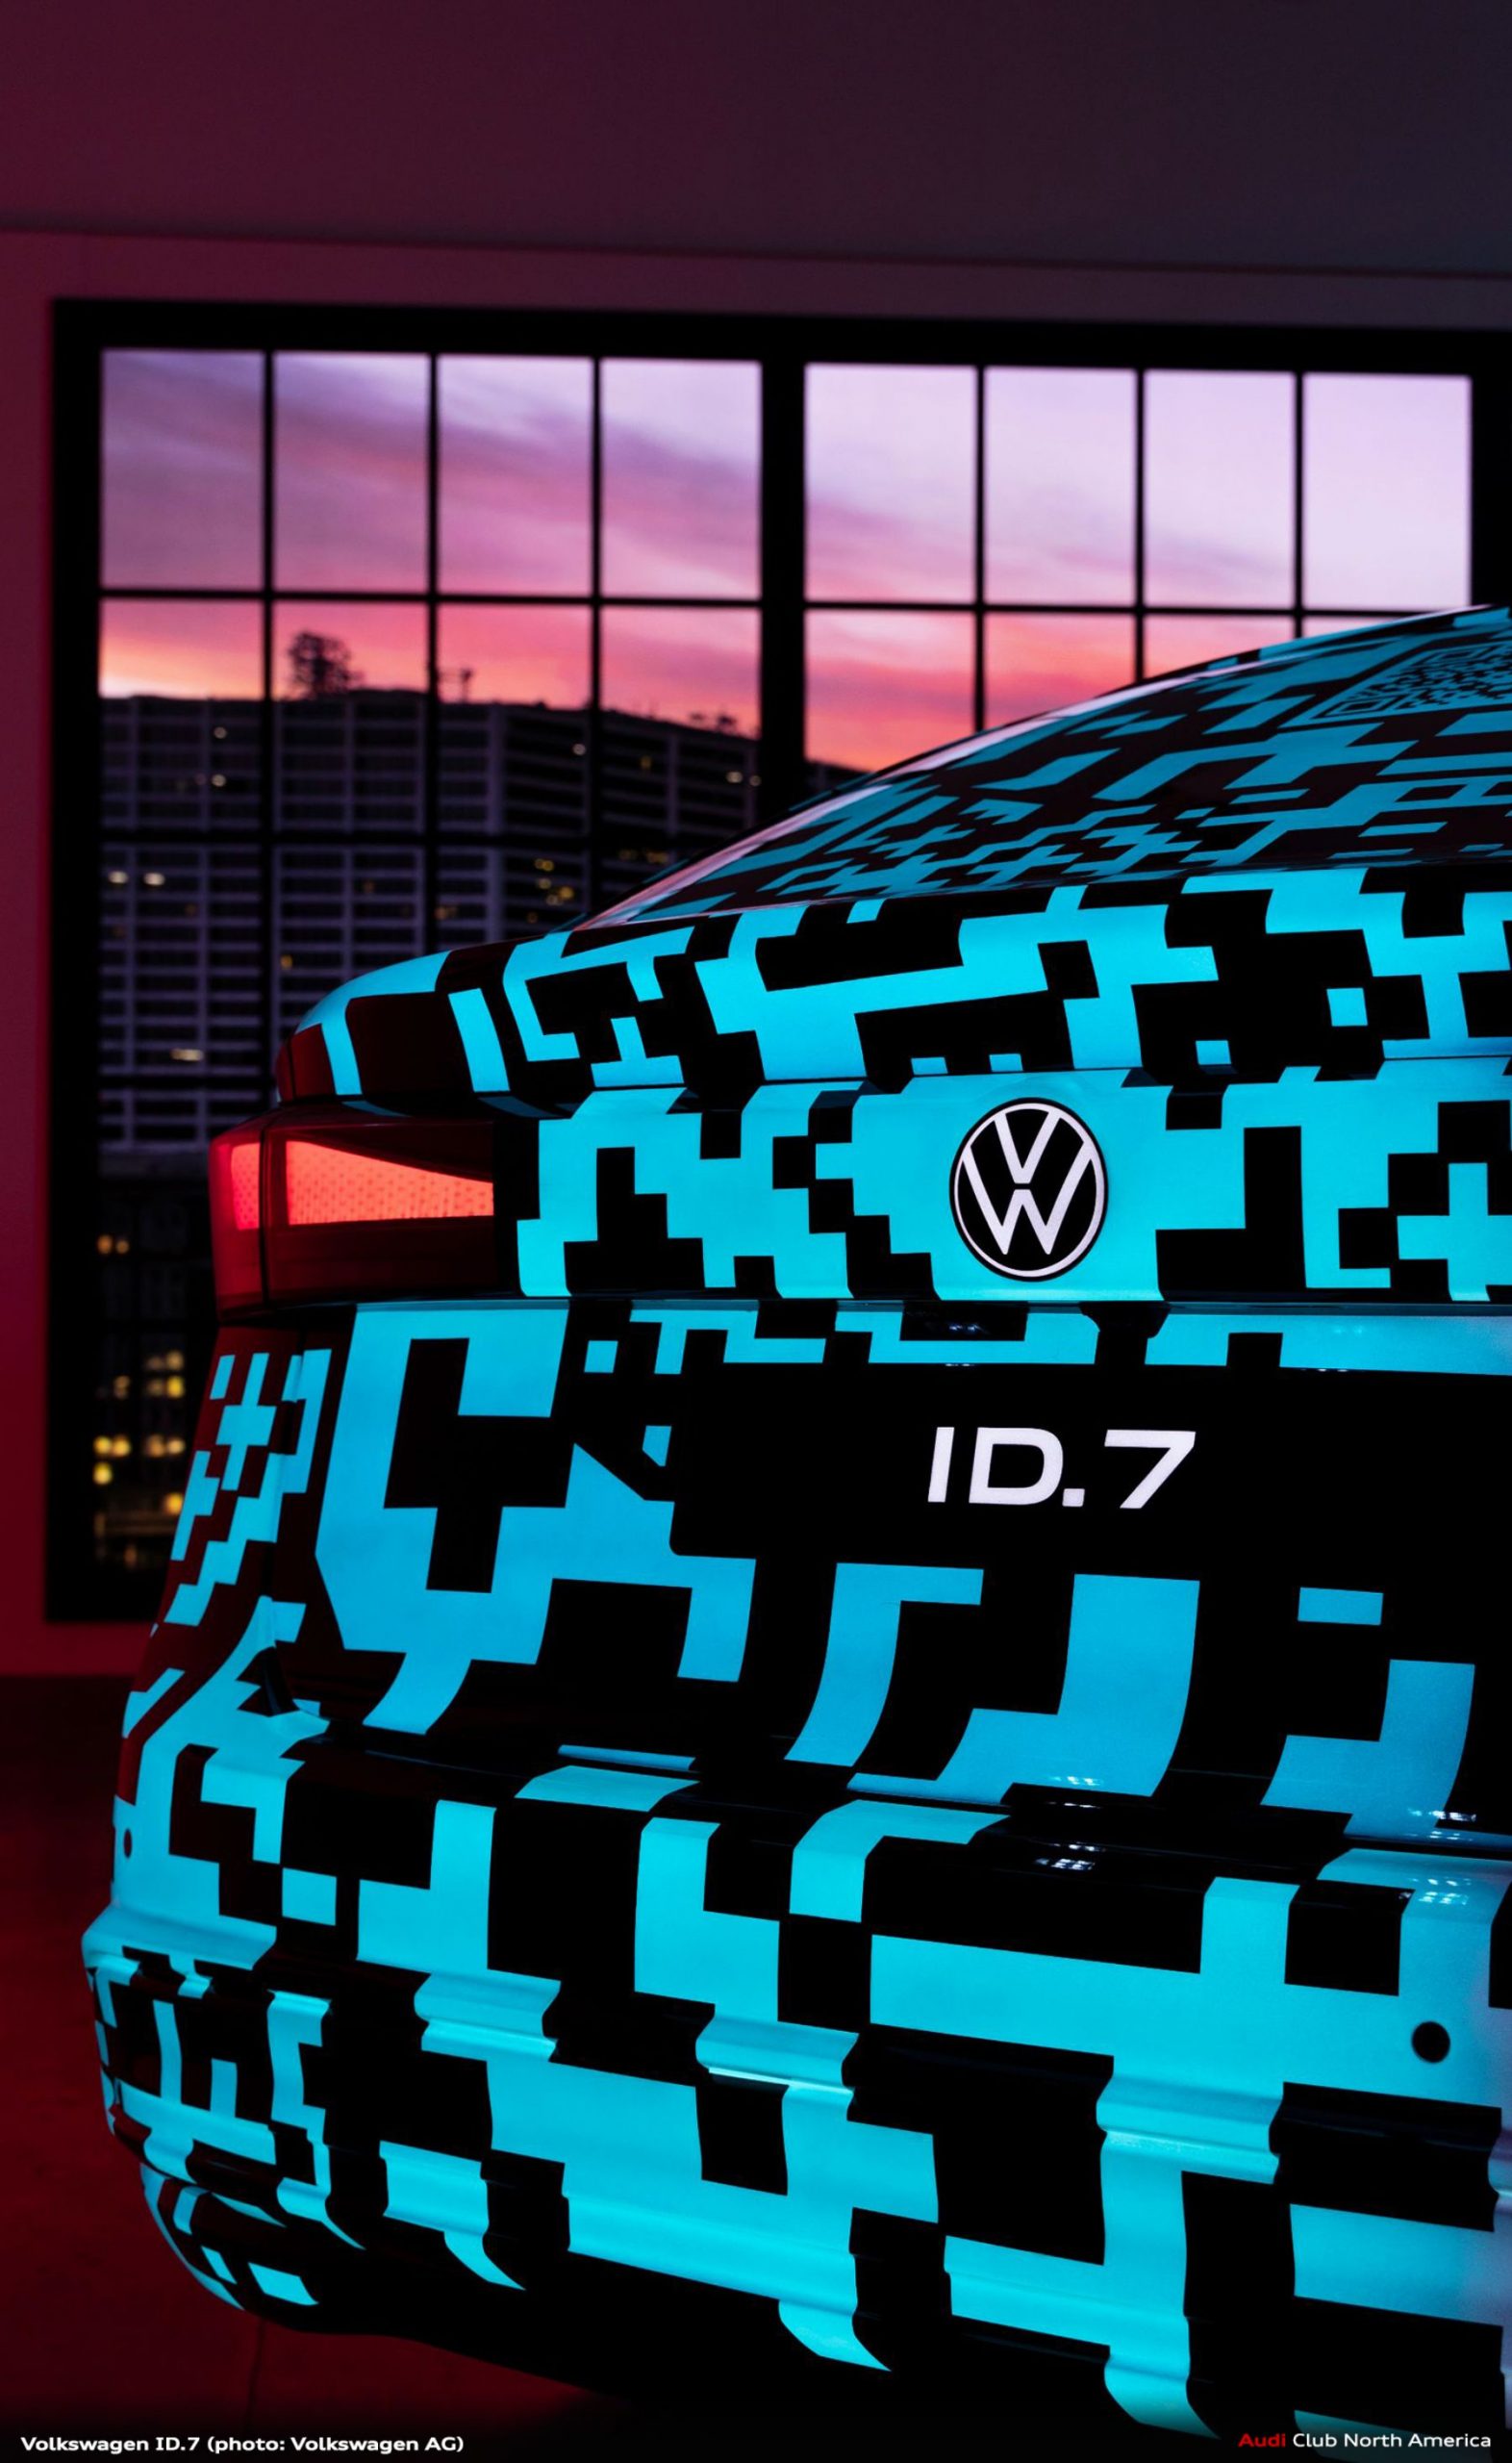 Volkswagen ID.7 makes its world premiere - Green Car Congress